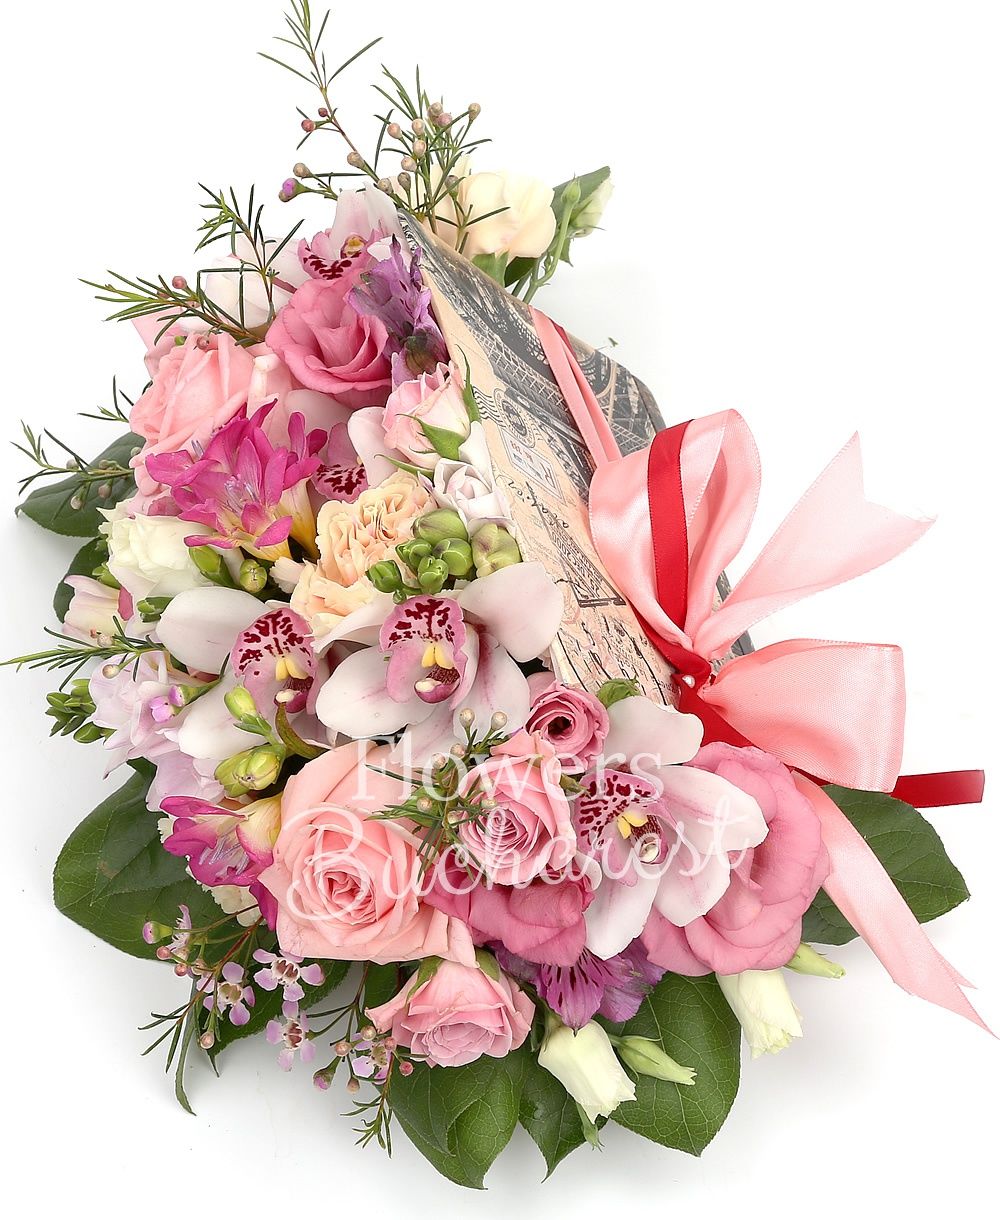 3 pink roses, 3 pink miniroses, 3 cream carnations, 5 cyclam freesias, 2 mauve alstroemeria, white cymbidium, 2 pink lisianthus, pink waxflower, greenery